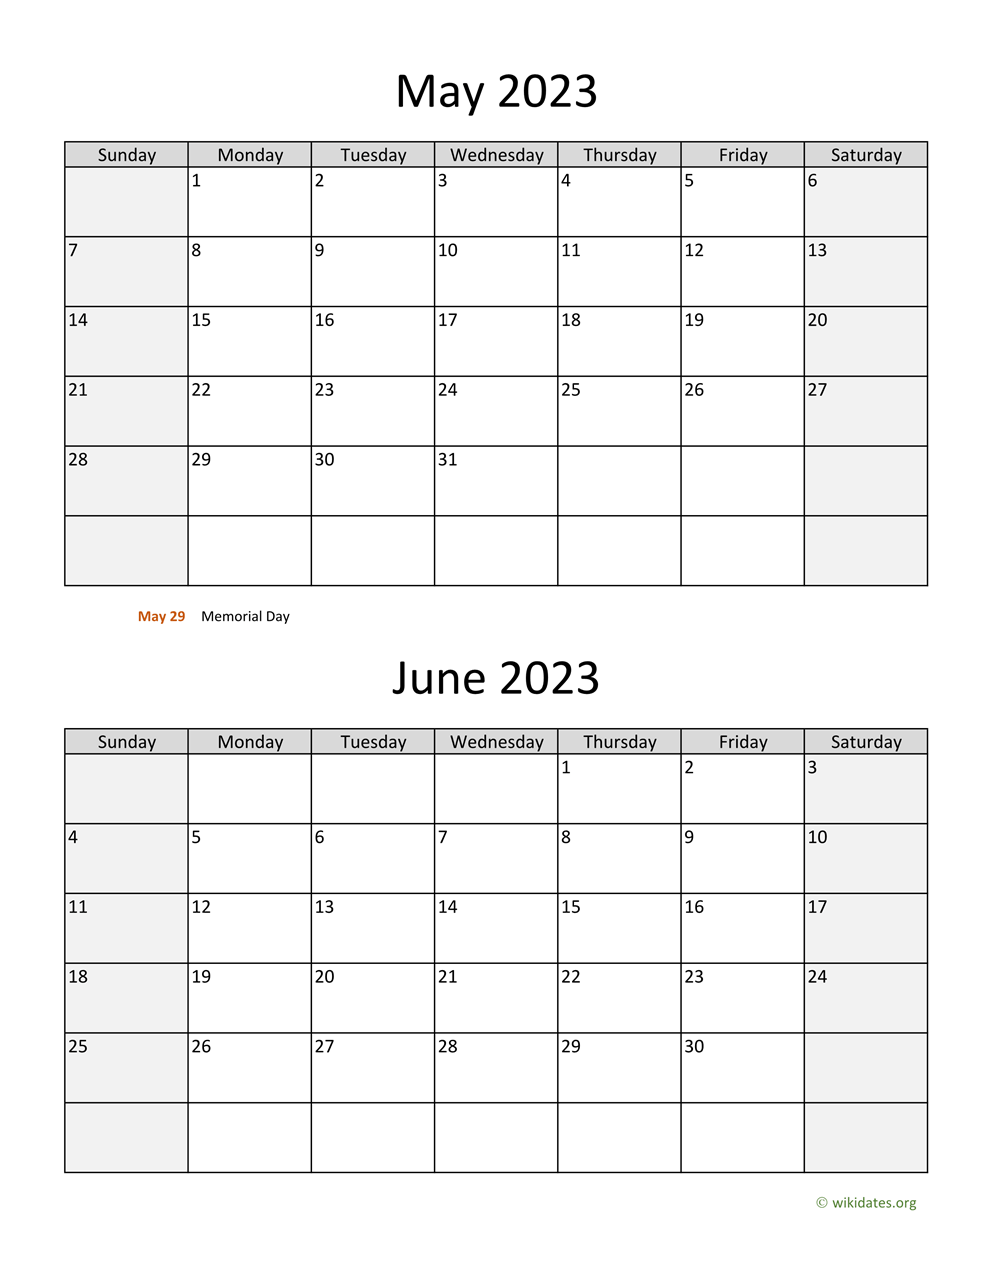 may-june-2023-calendar-get-latest-map-update